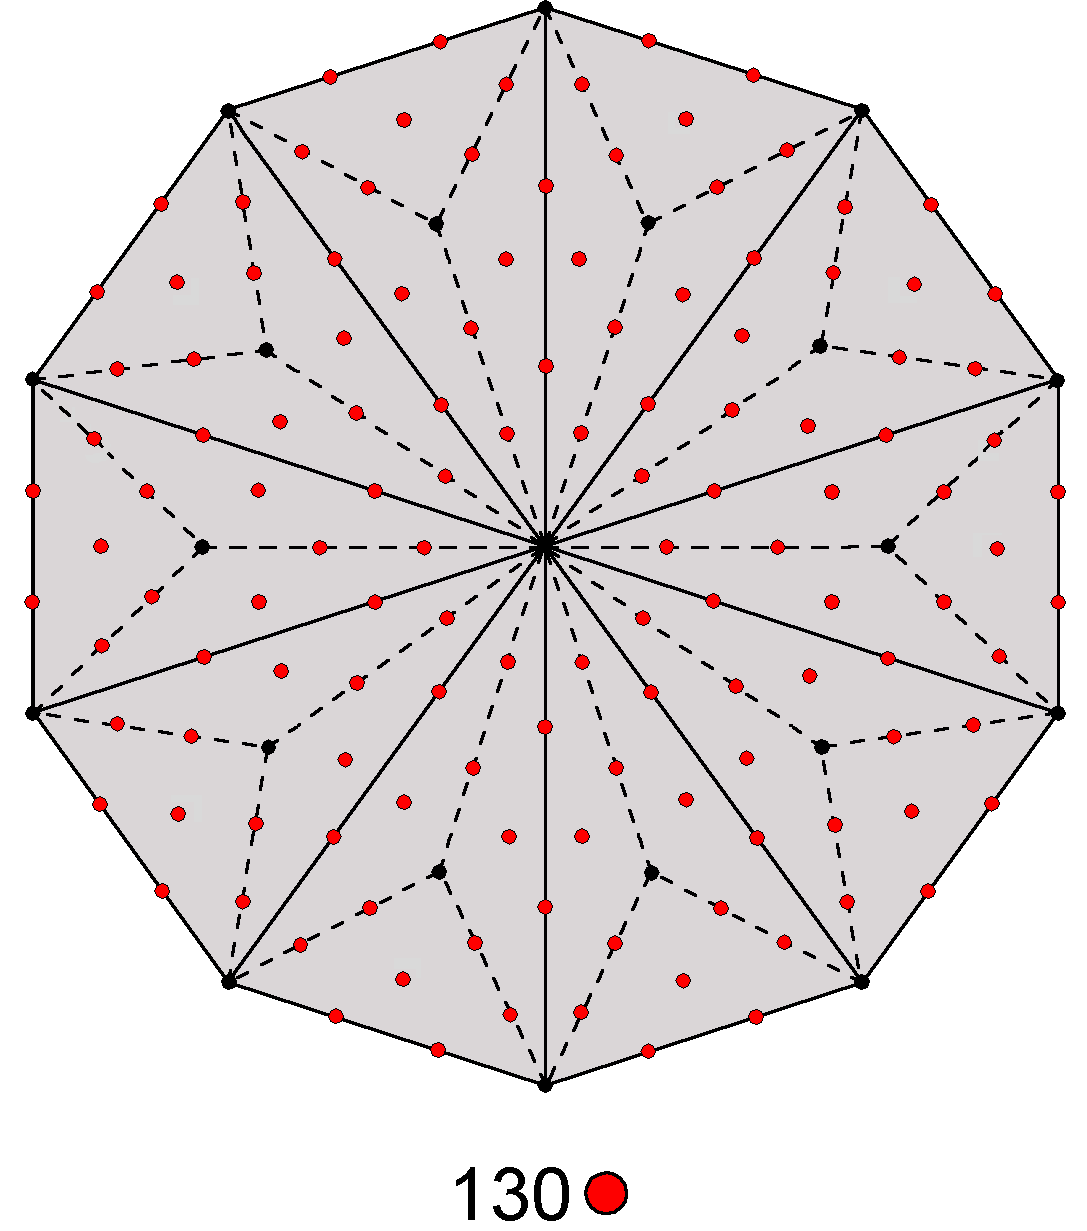 130 hexagonal yods in Type B decagon